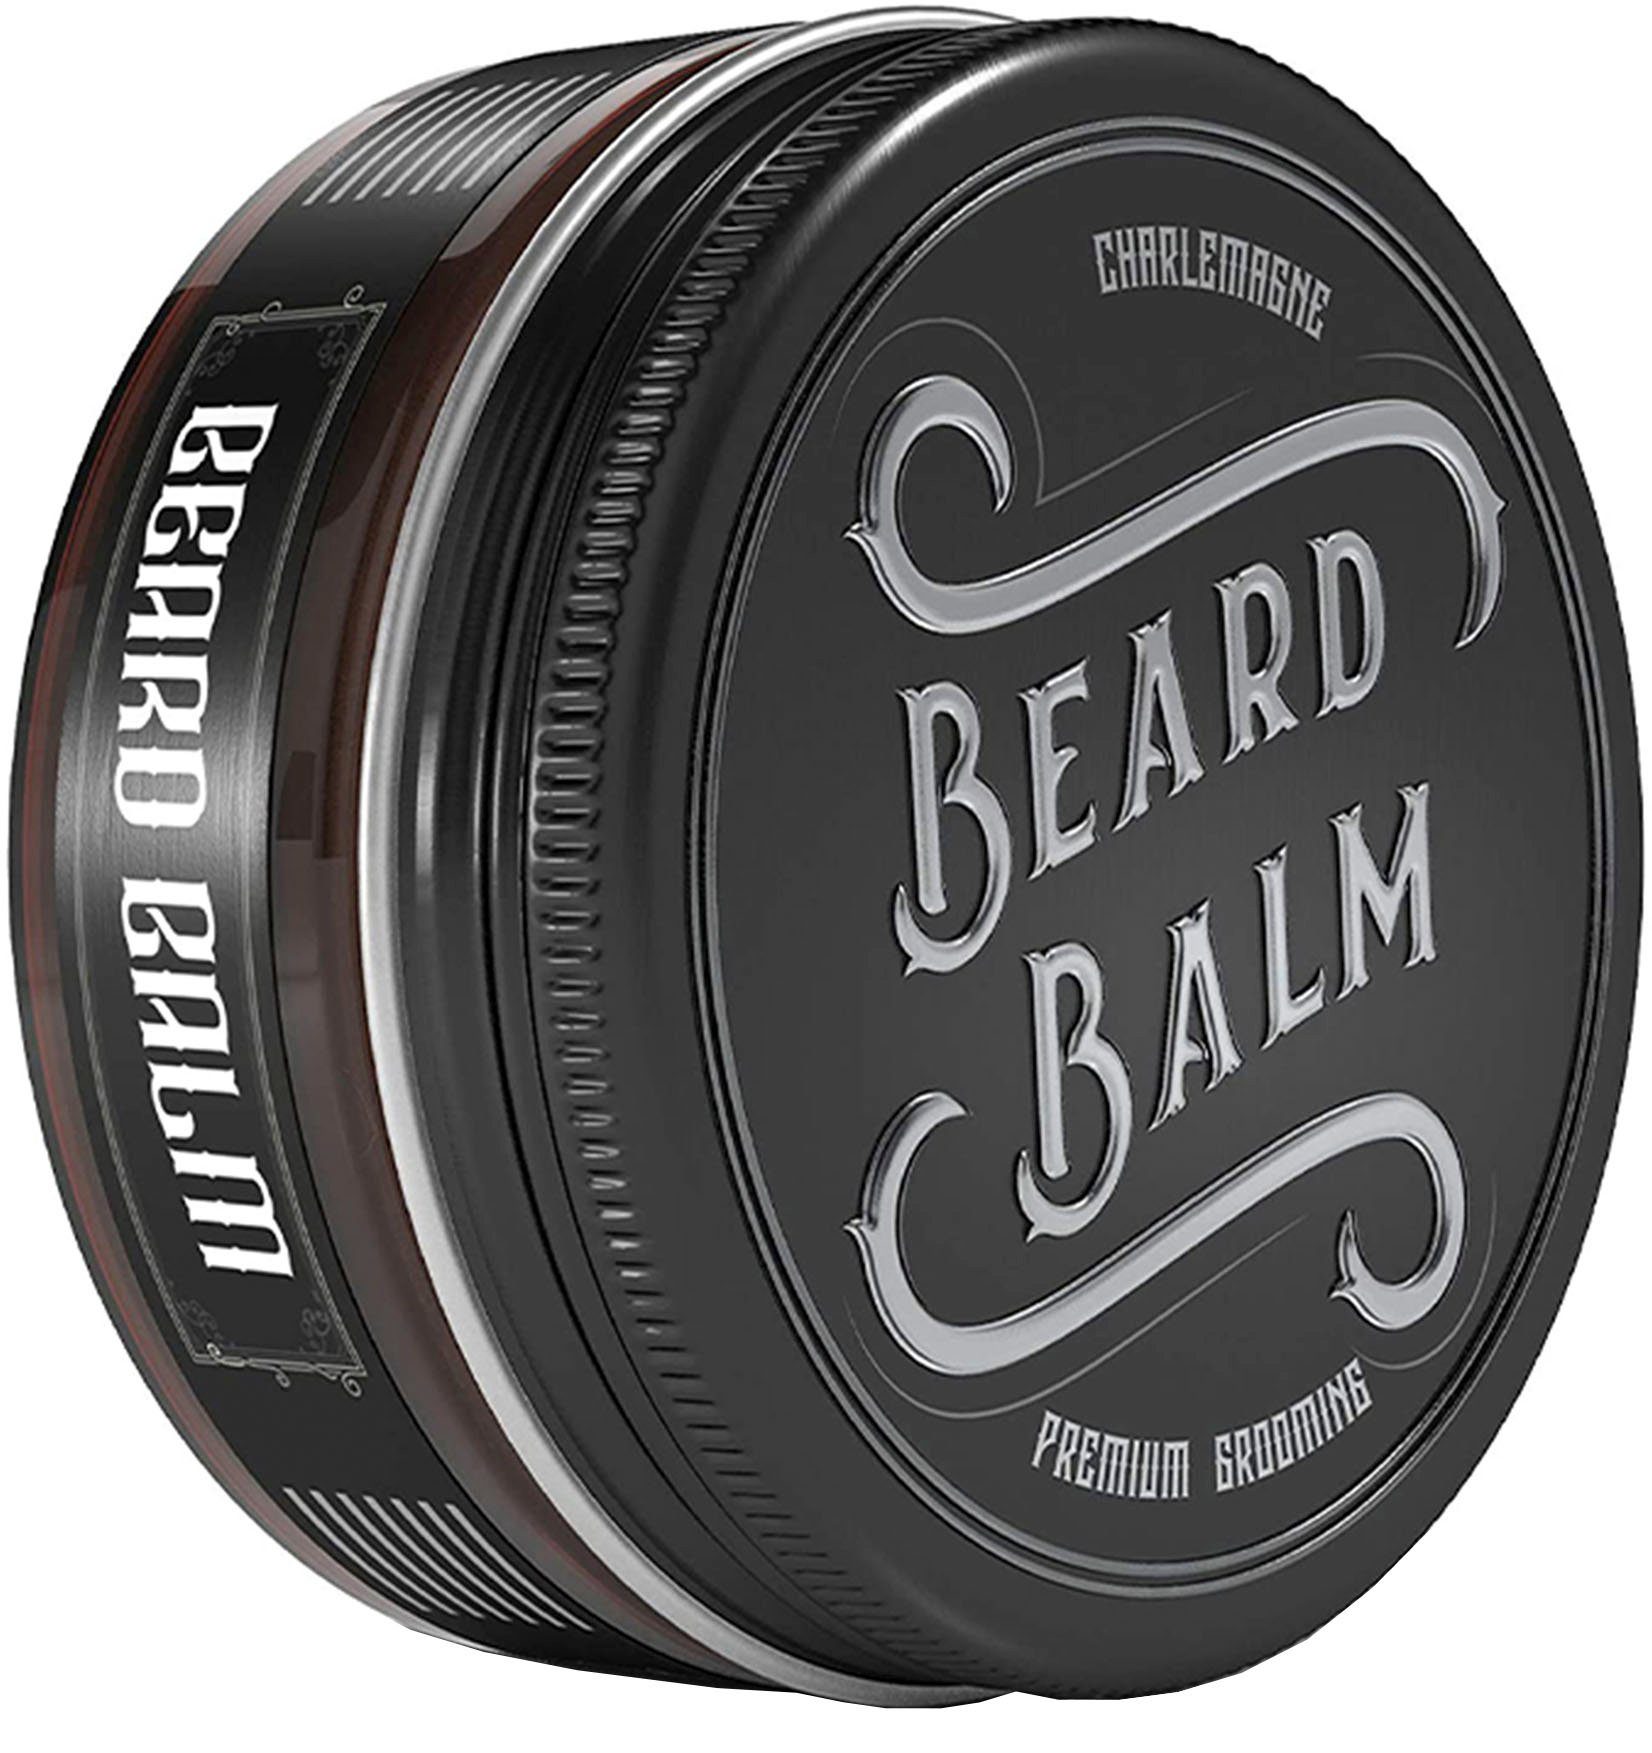 CHARLEMAGNE Bartbalsam Balm Beard